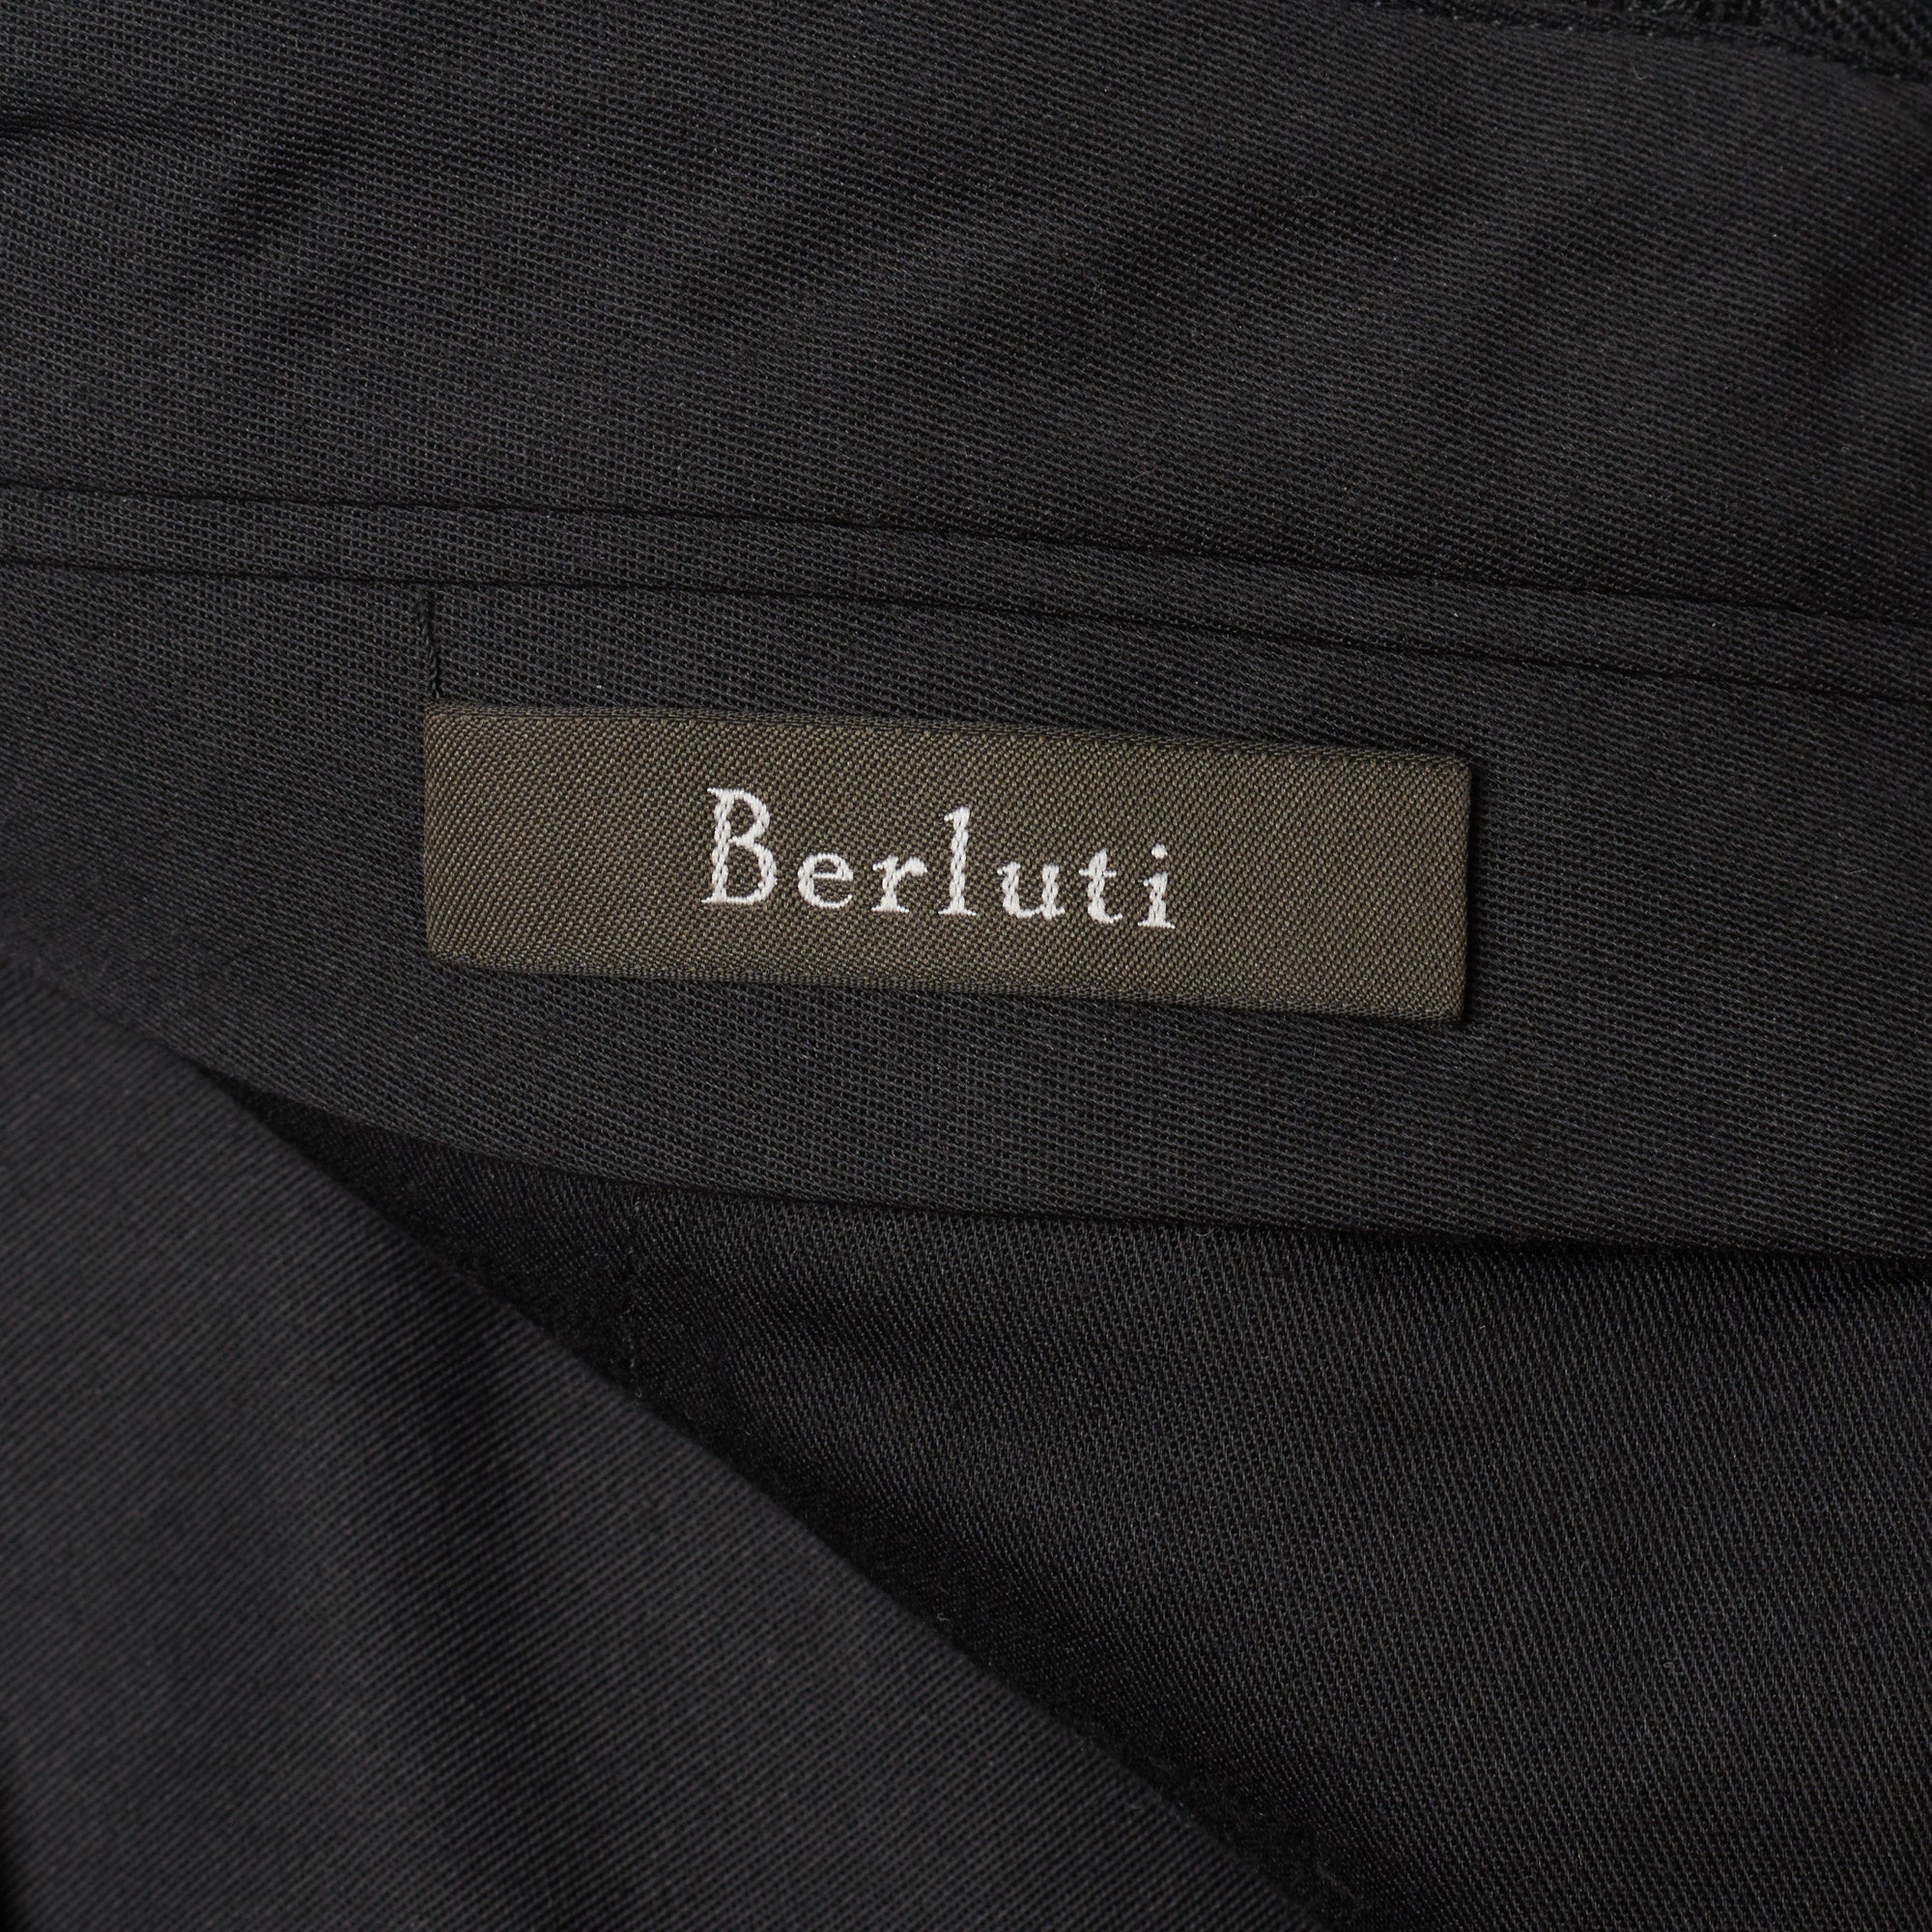 BERLUTI Paris Black Twill Virgin Wool Blend Slim Fit Chino Pants EU 50 NEW US 34 BERLUTI